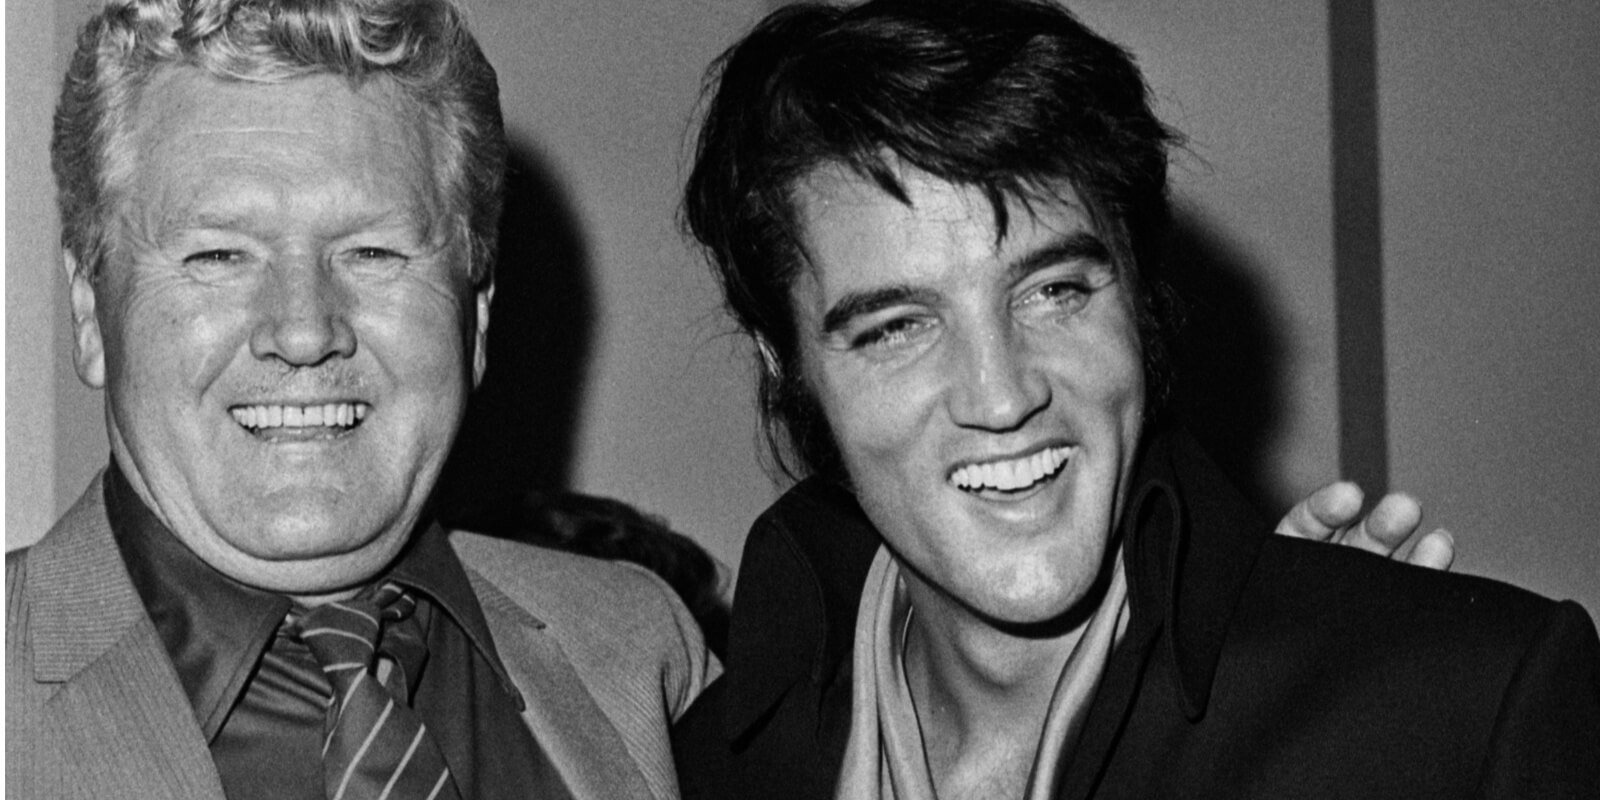 Vernon Presley and Elvis Presley pose together in 1969.